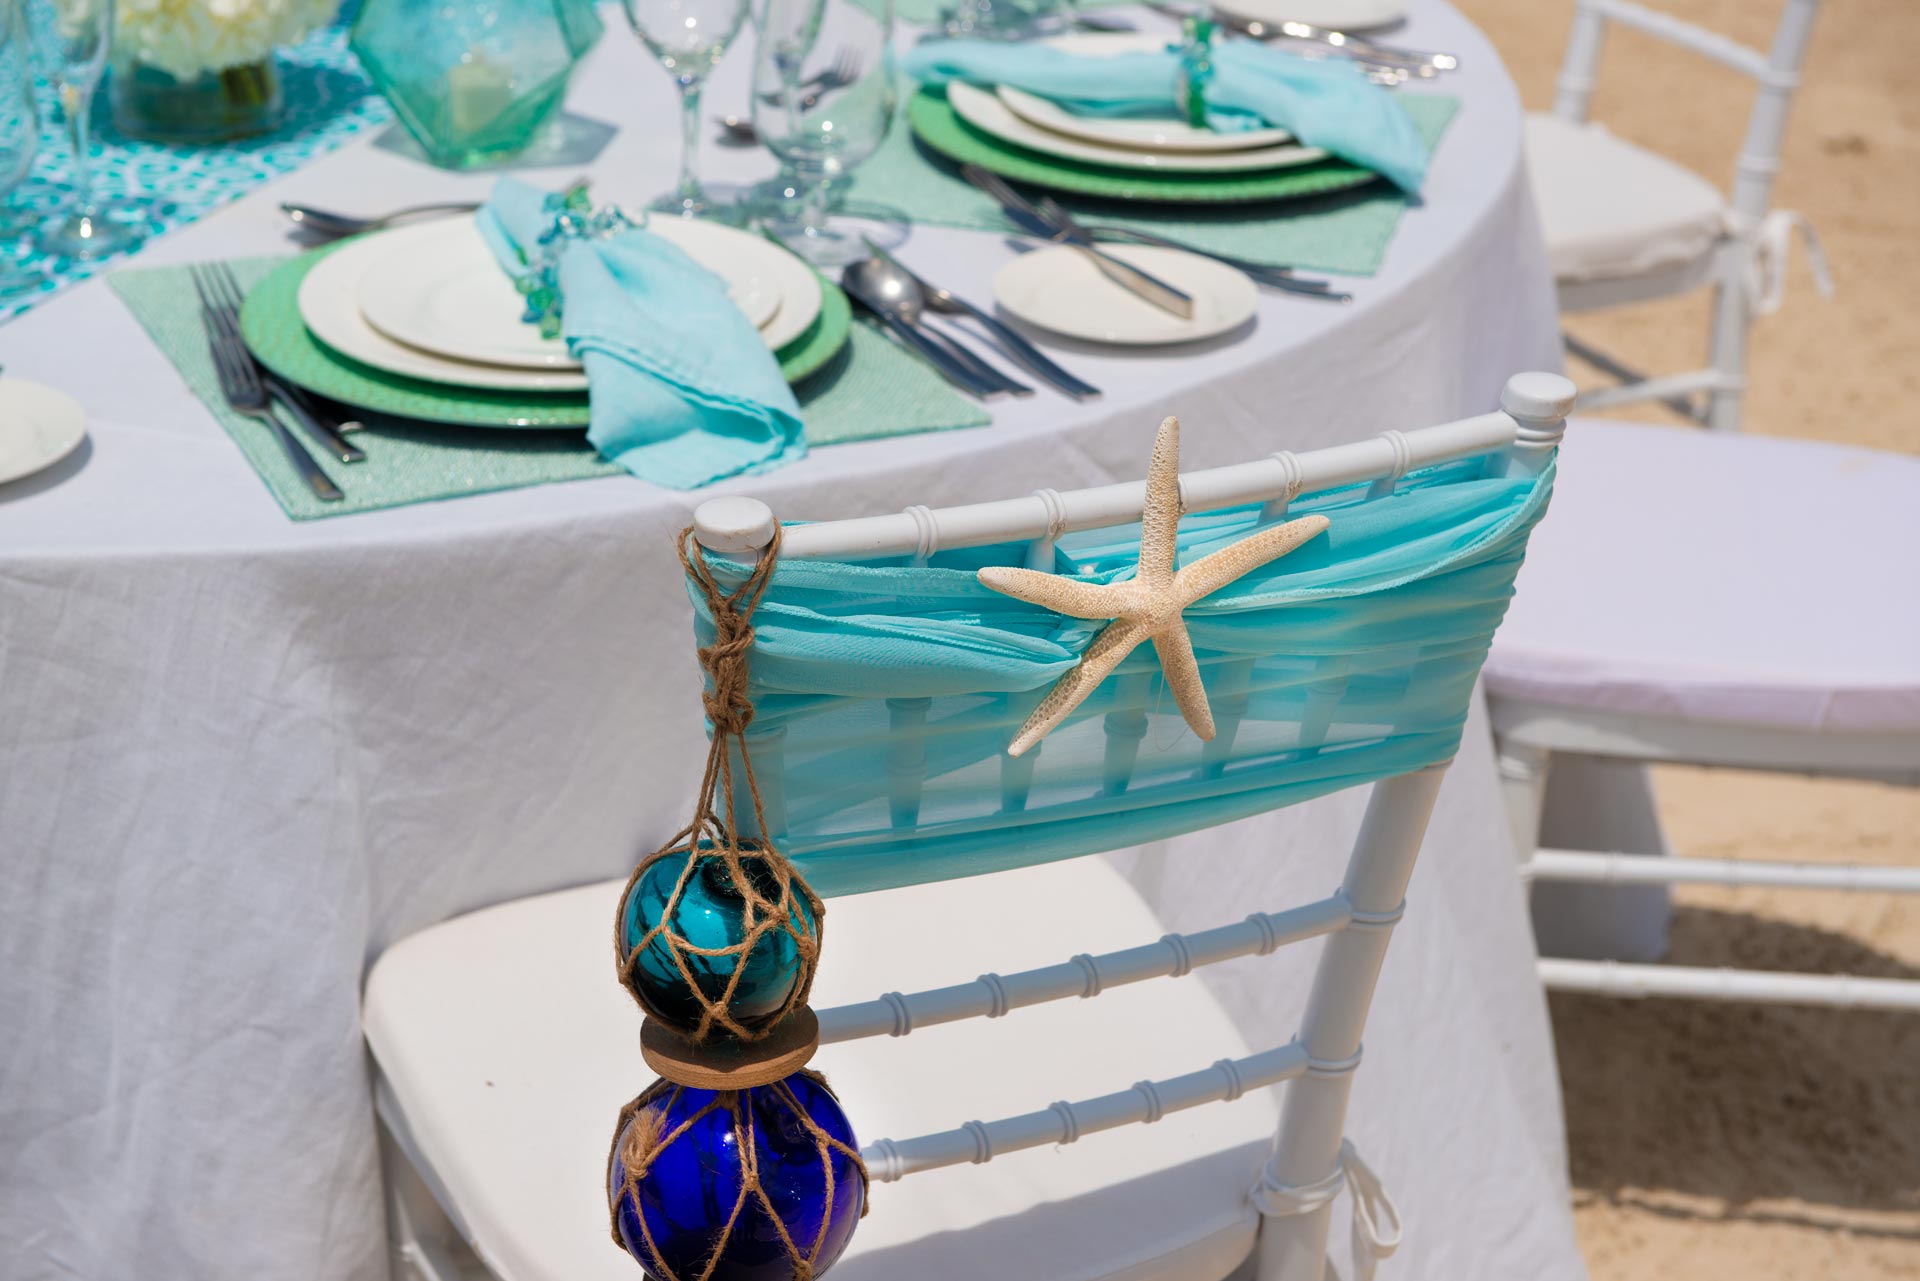 Chair at beach wedding reception